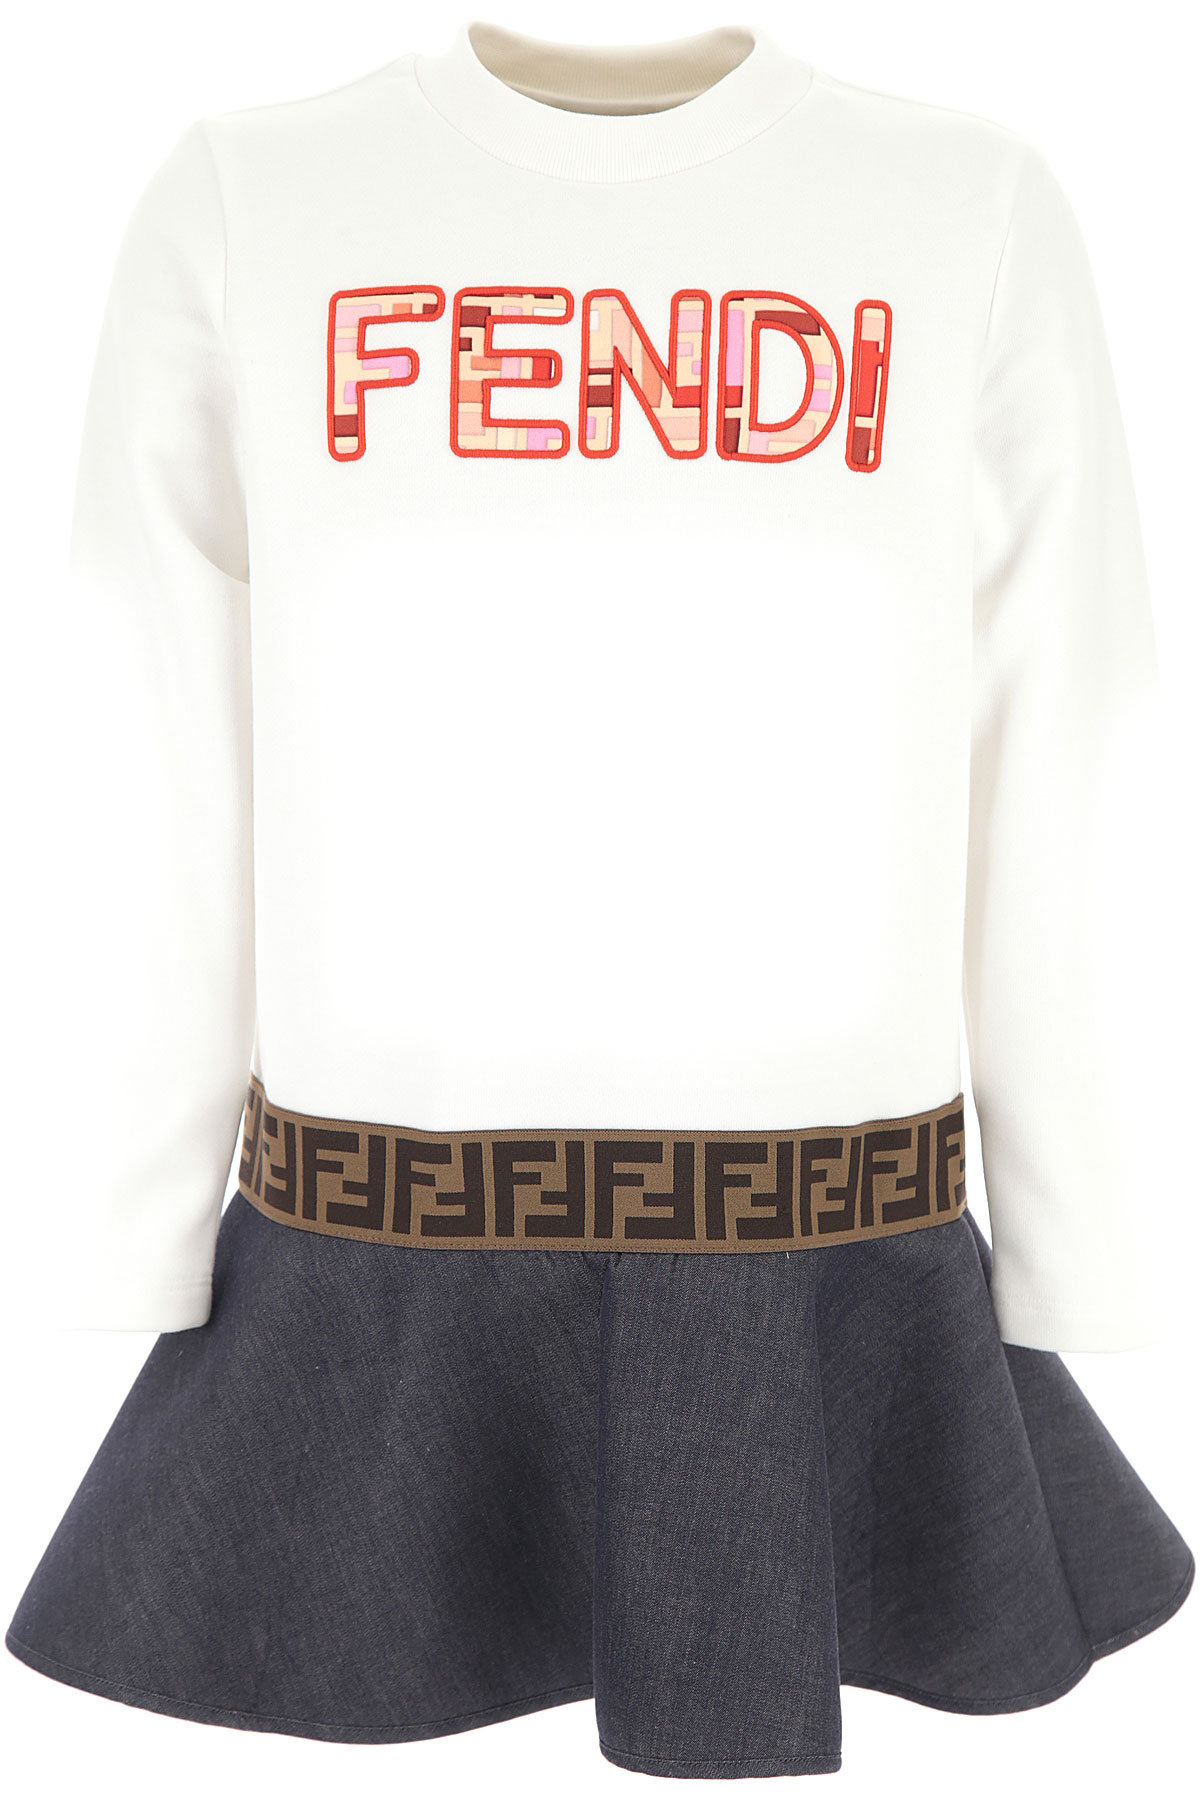 Girls Clothing Fendi, Style code: jfb473-aezq-f0znm